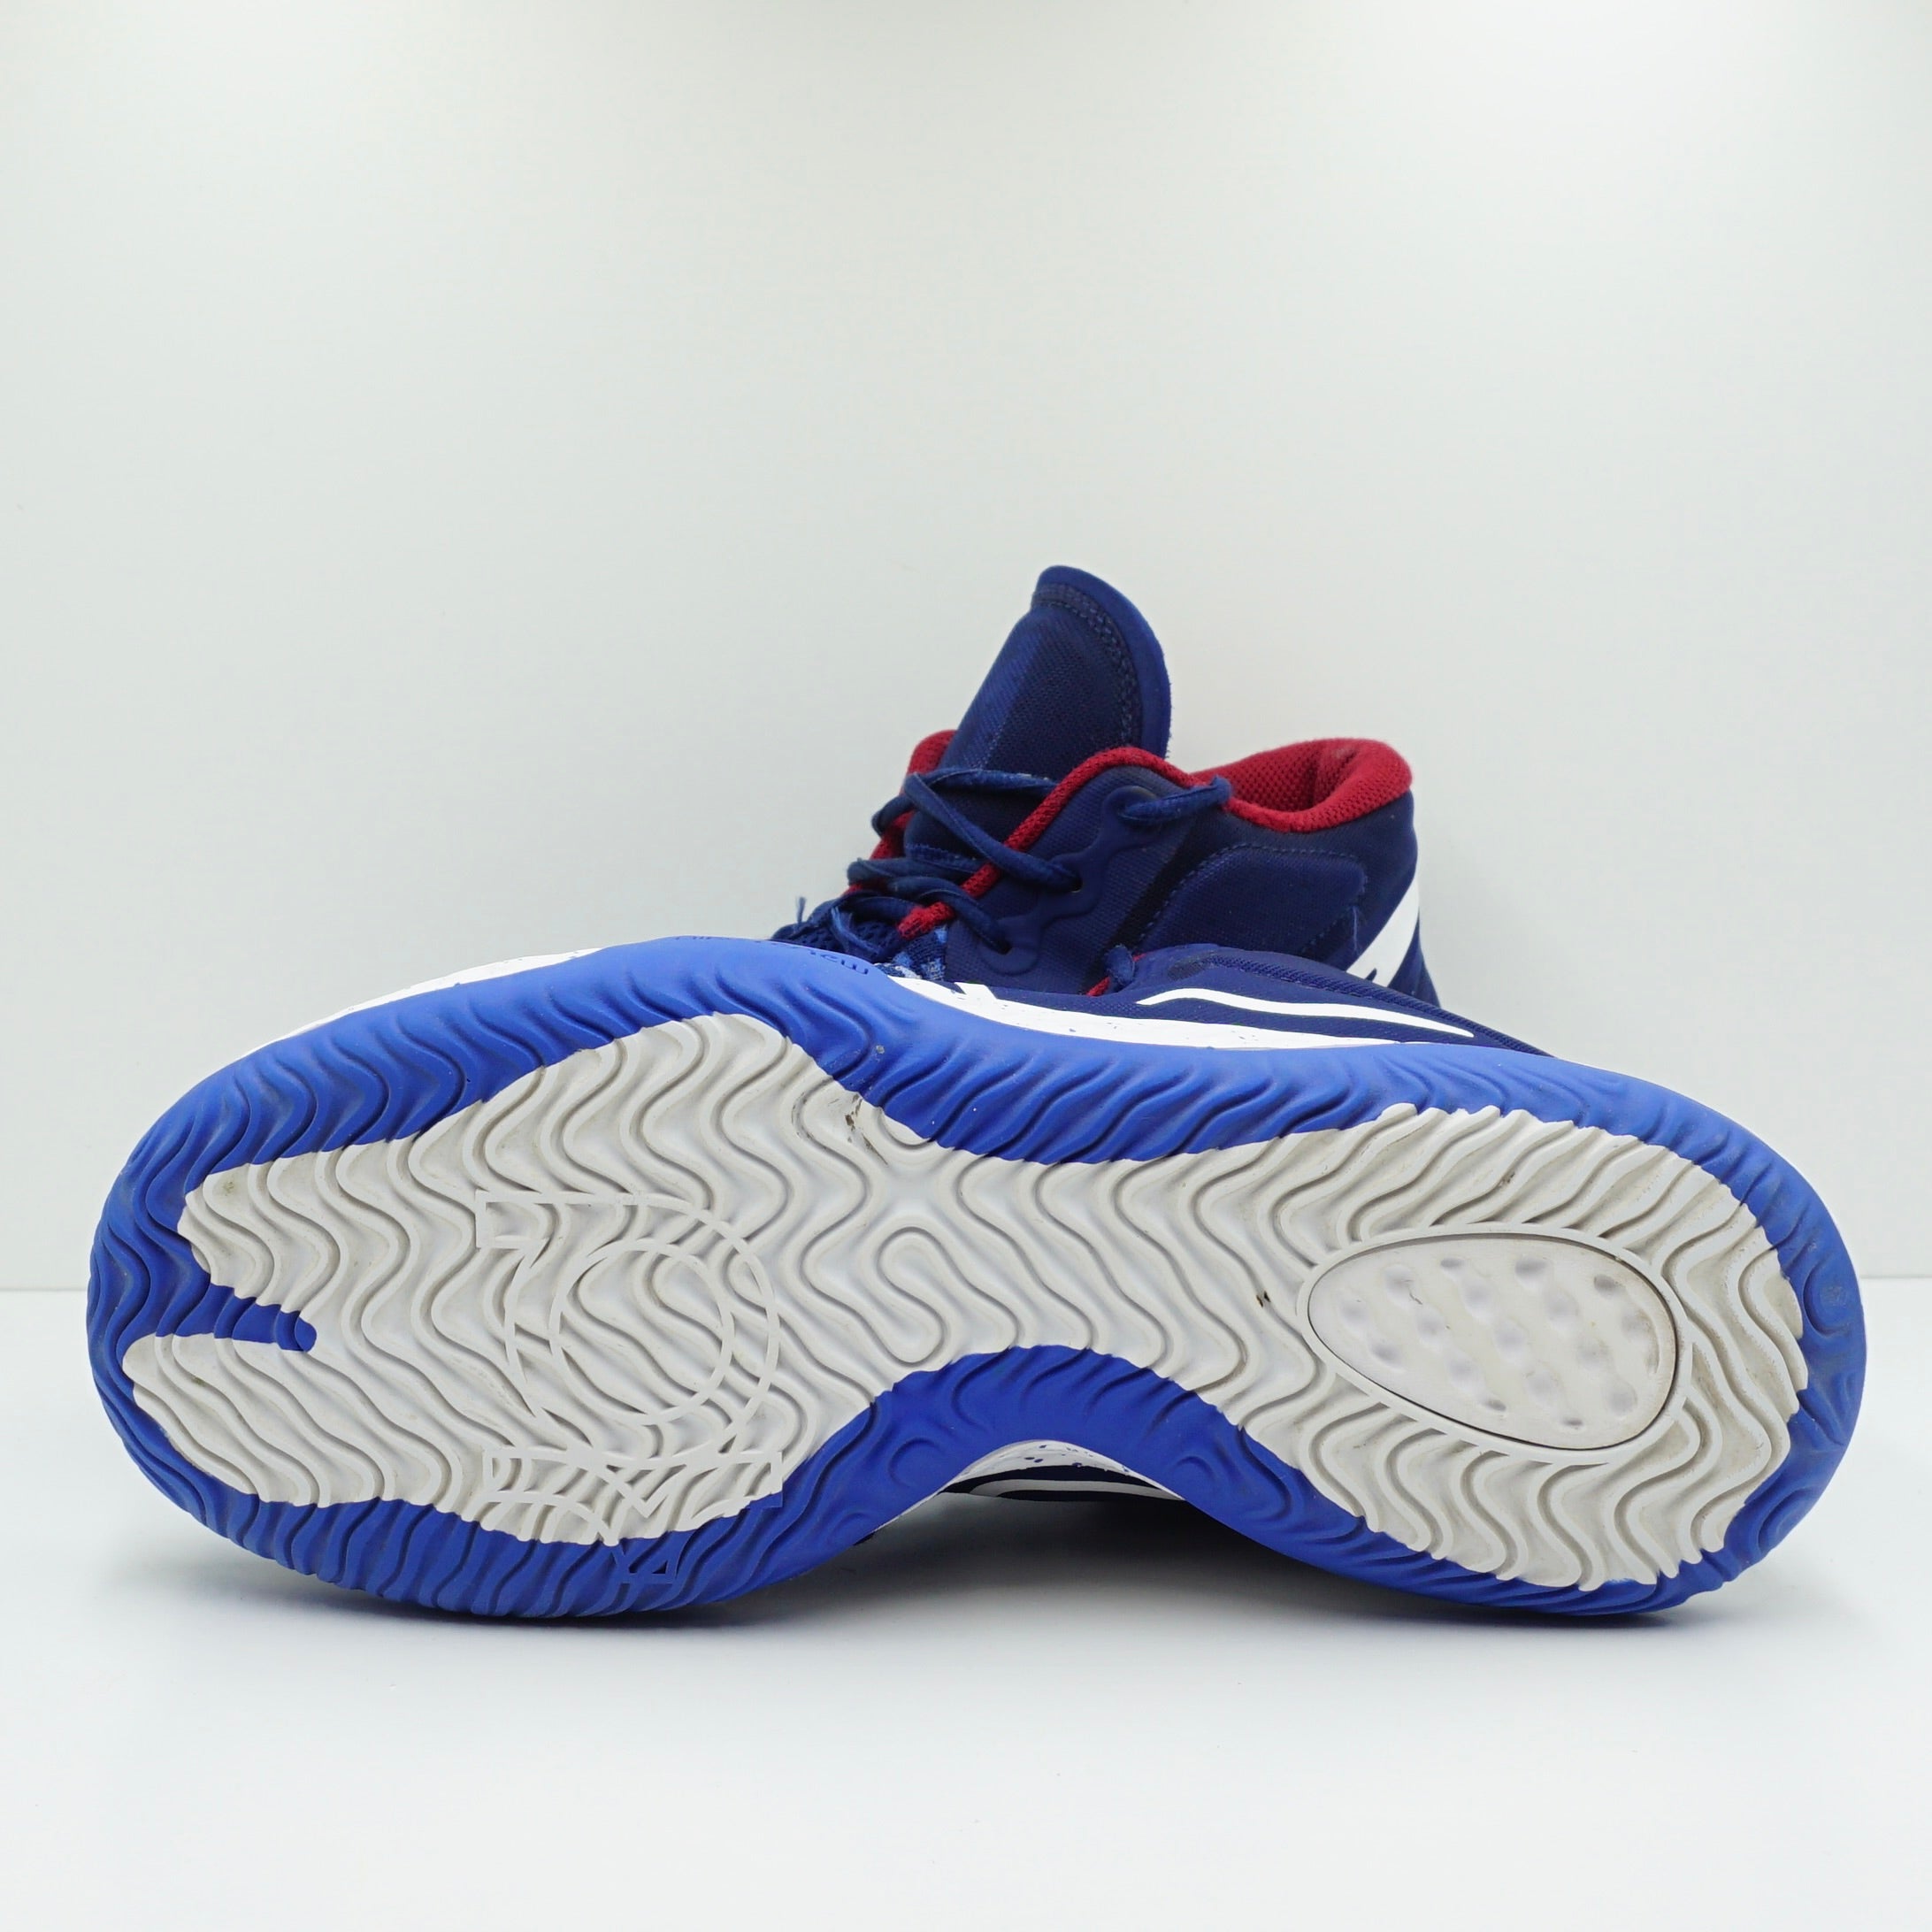 Nike KD Trey 5 VIII Blue Void